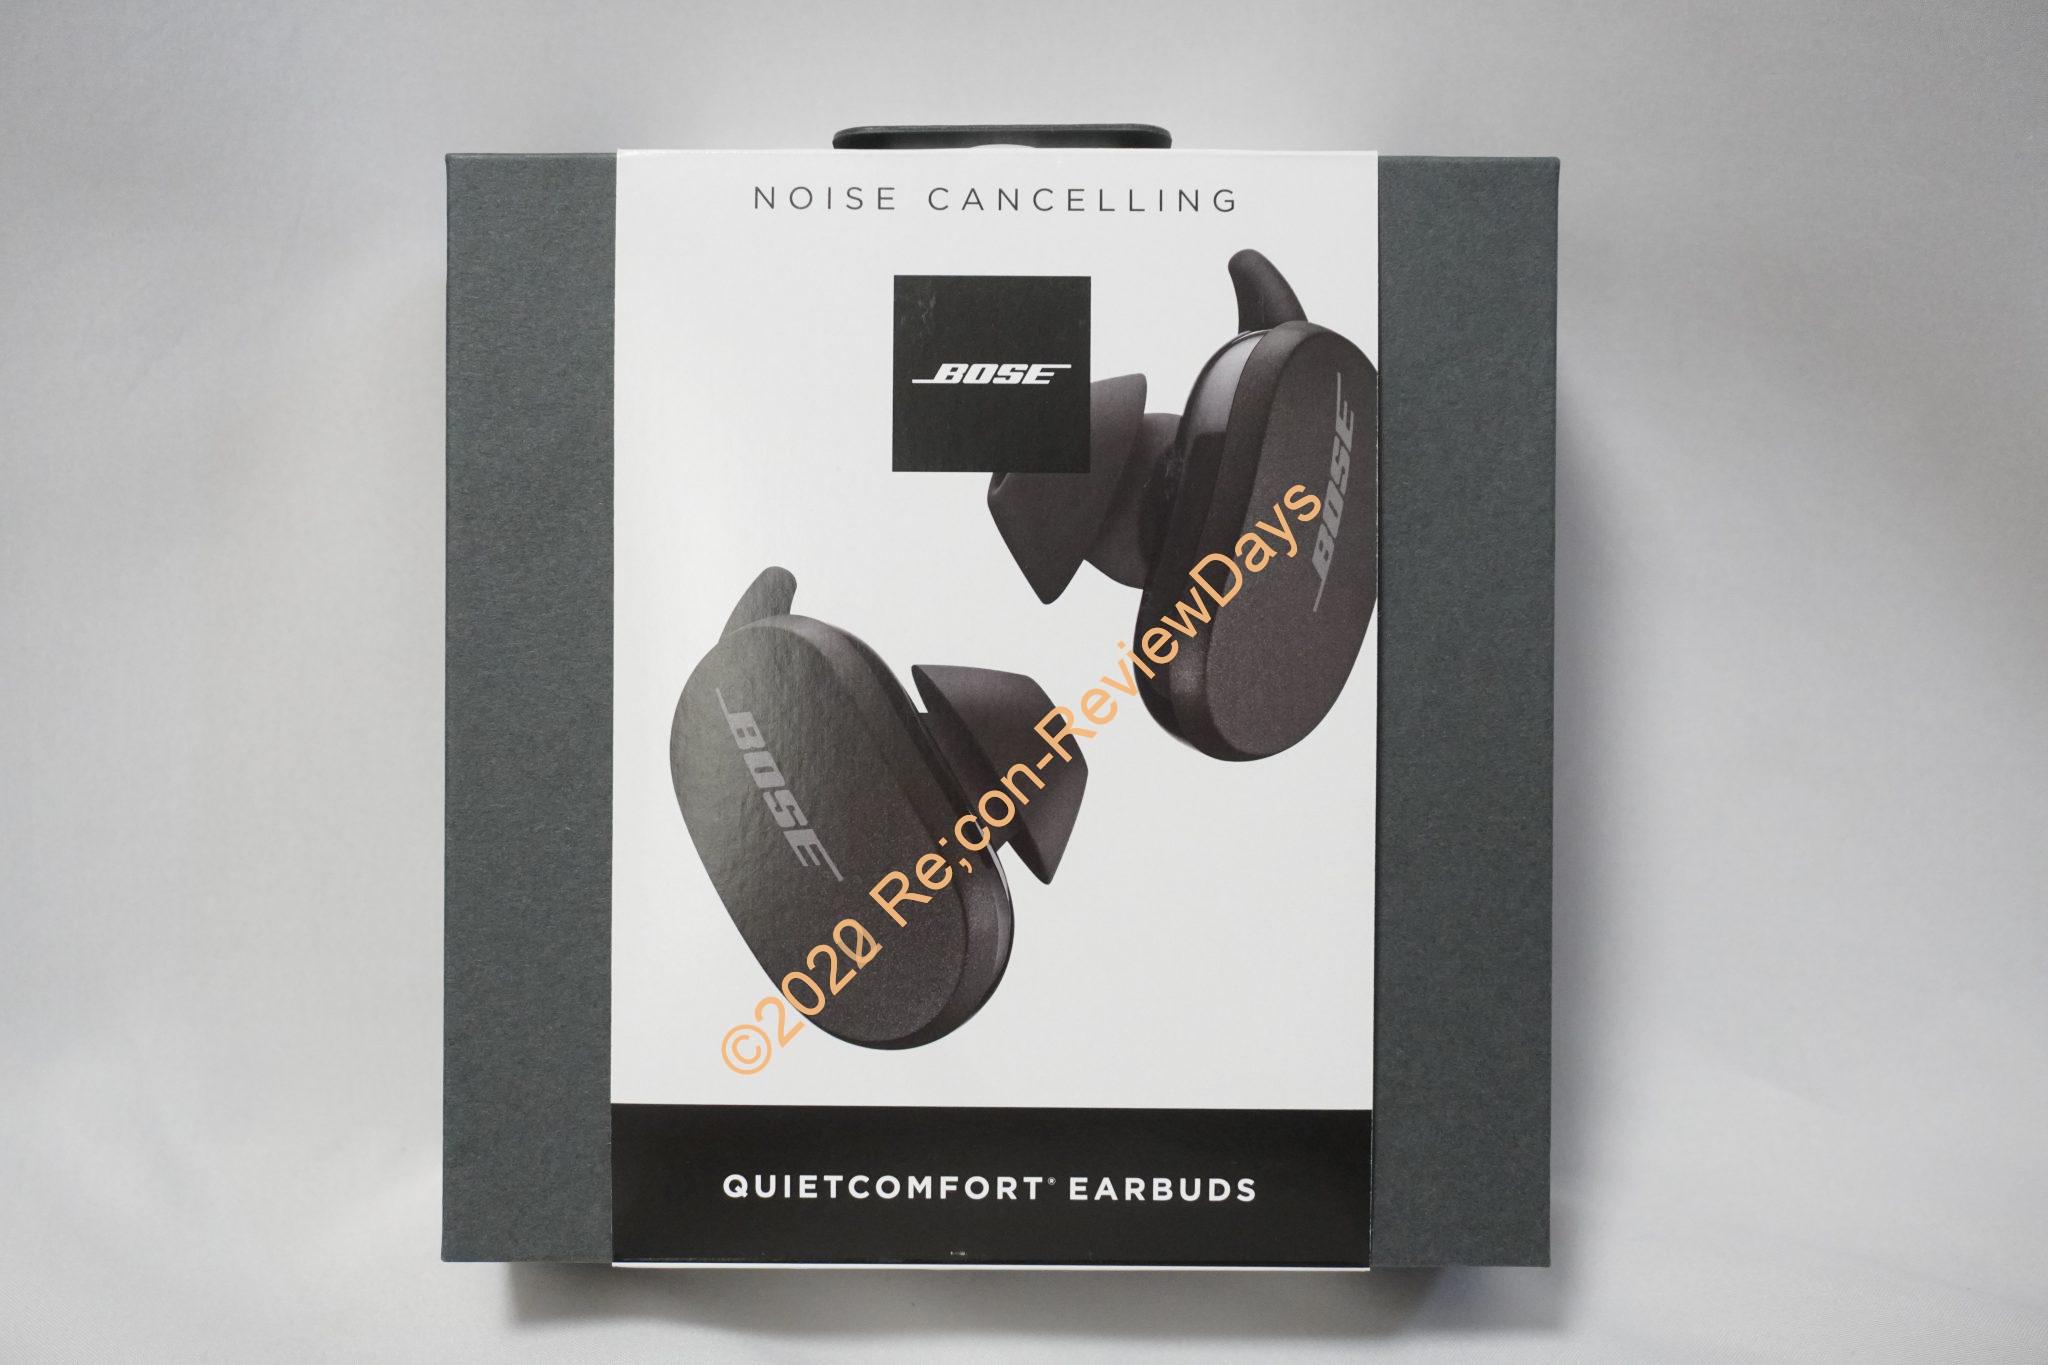 Bose QuietComfort Earbudsが発売日に到着 #BOSE #イヤホン #ノイキャン #完全ワイヤレス